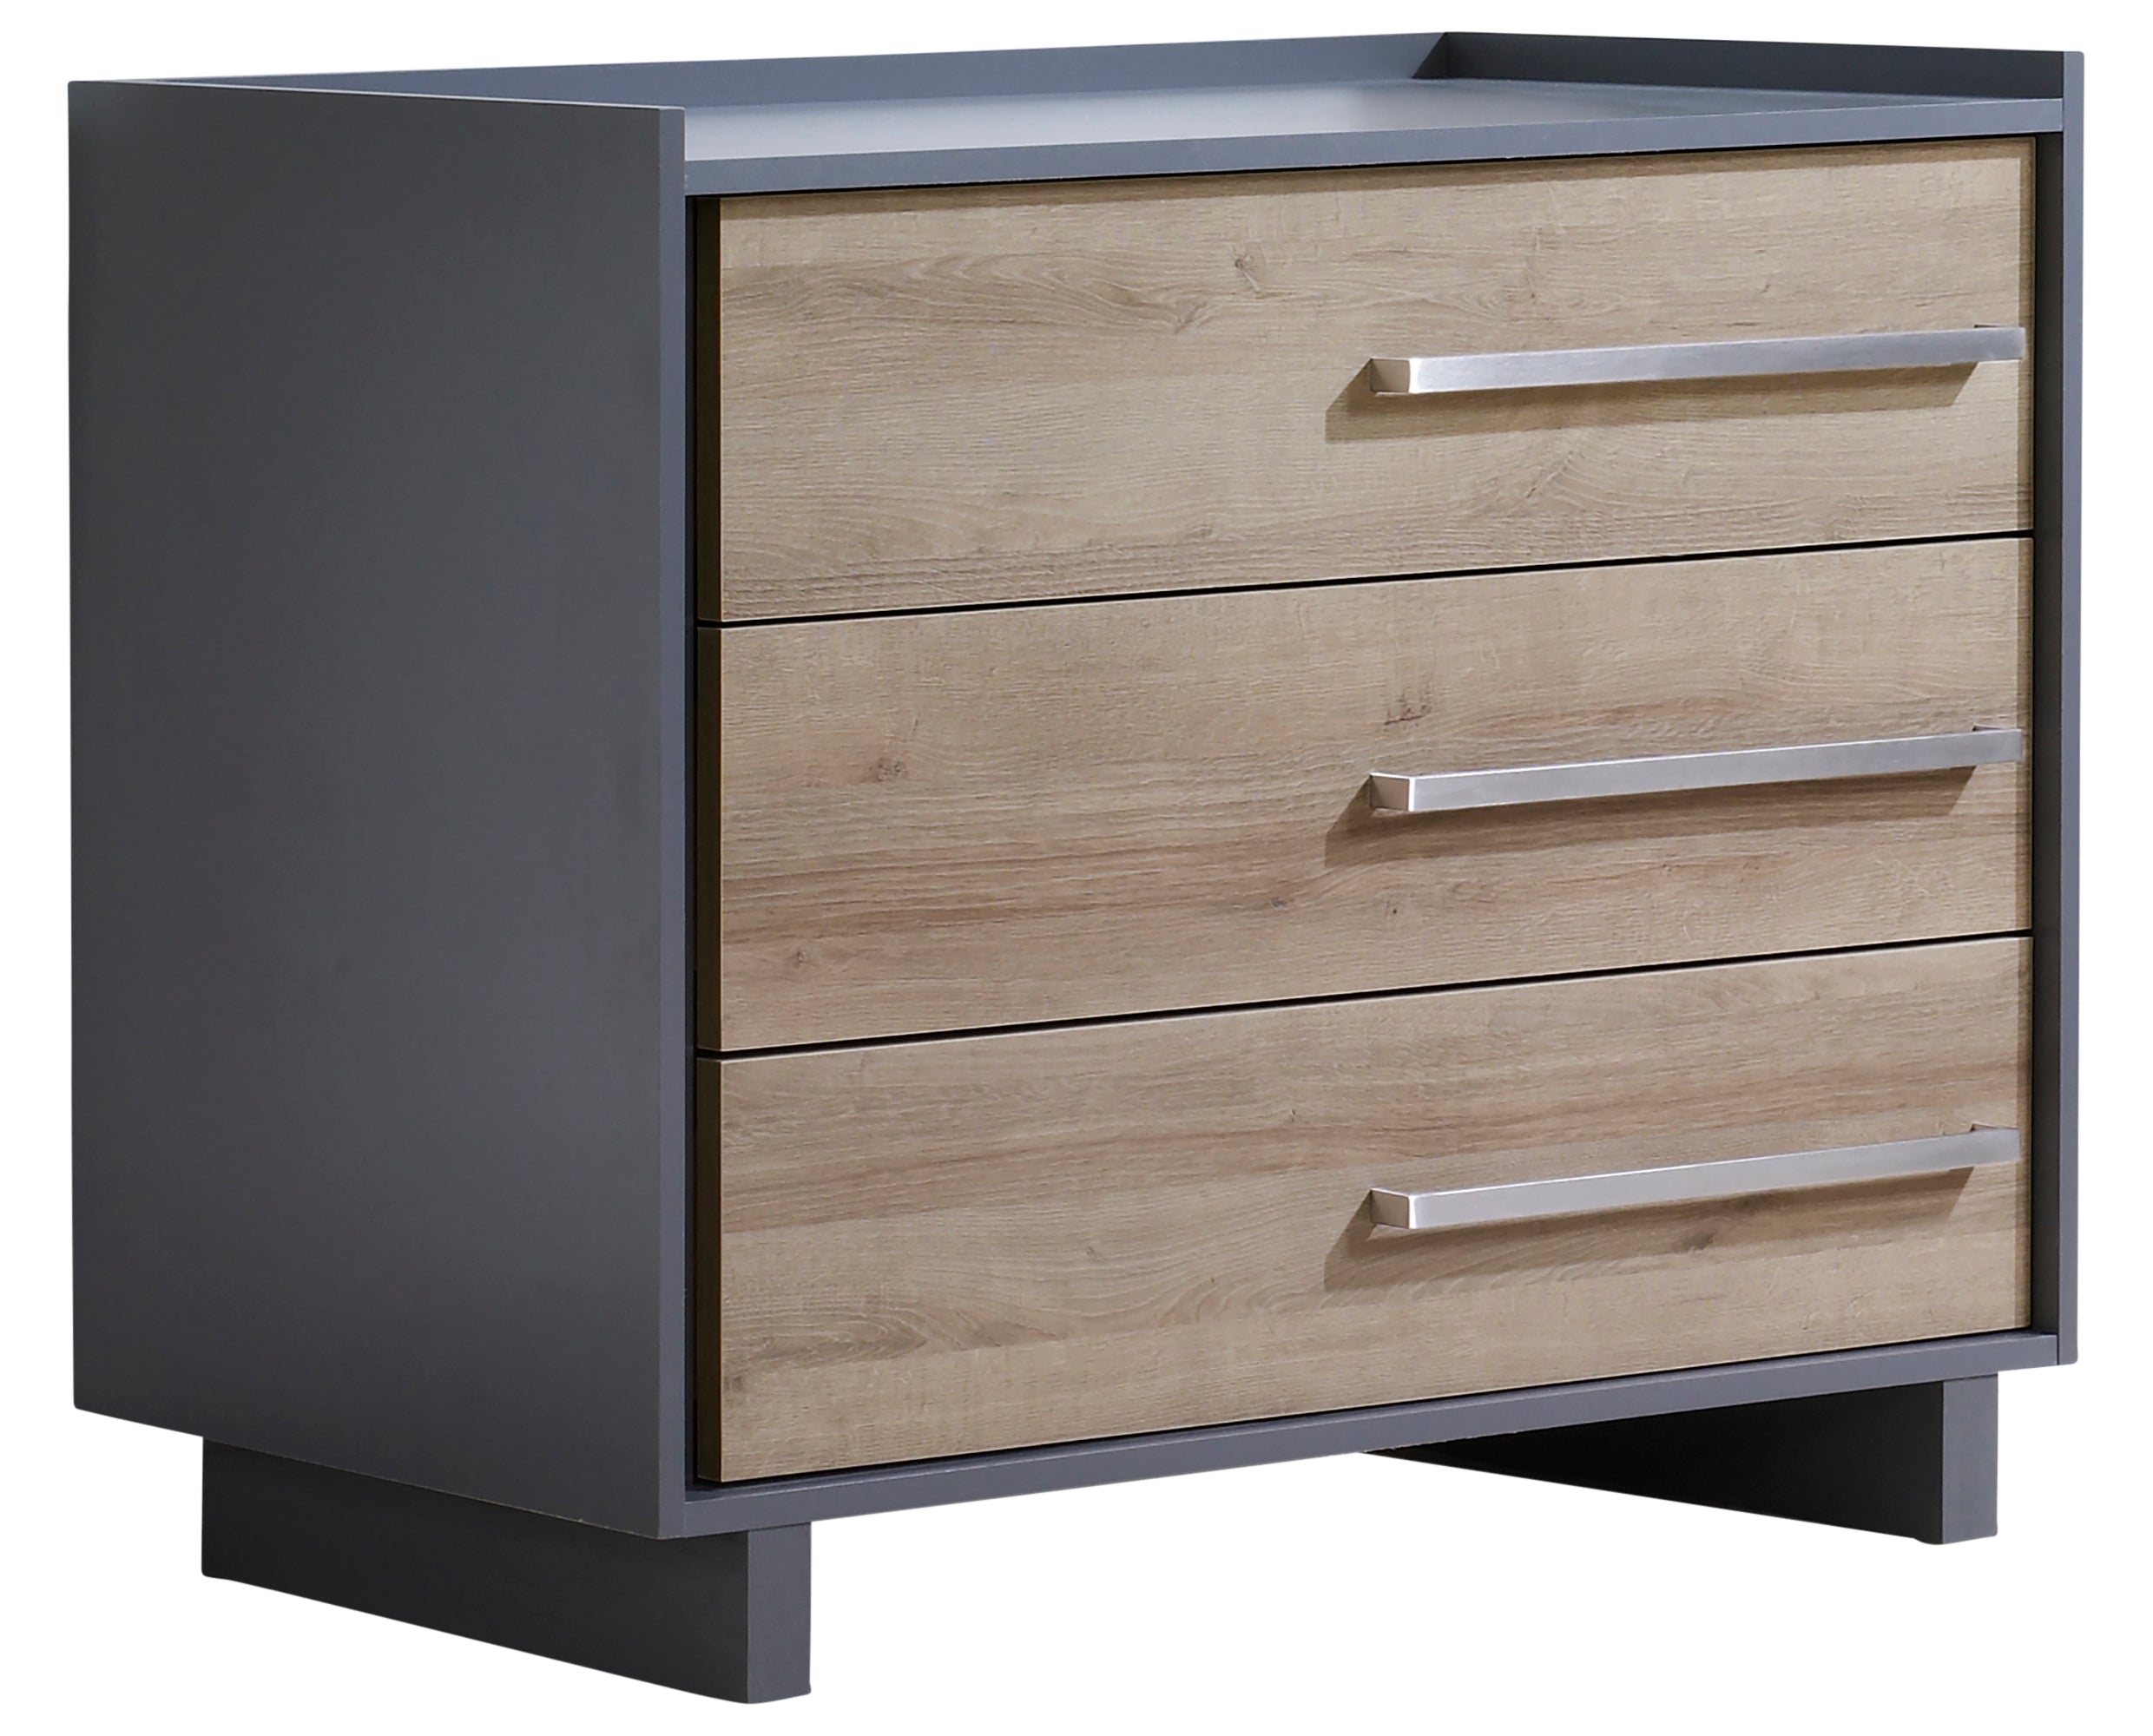 Charcoal Laminate & Natural Laminate with Charcoal Wood | Urban Crib & Dresser Set | Valley Ridge Furniture